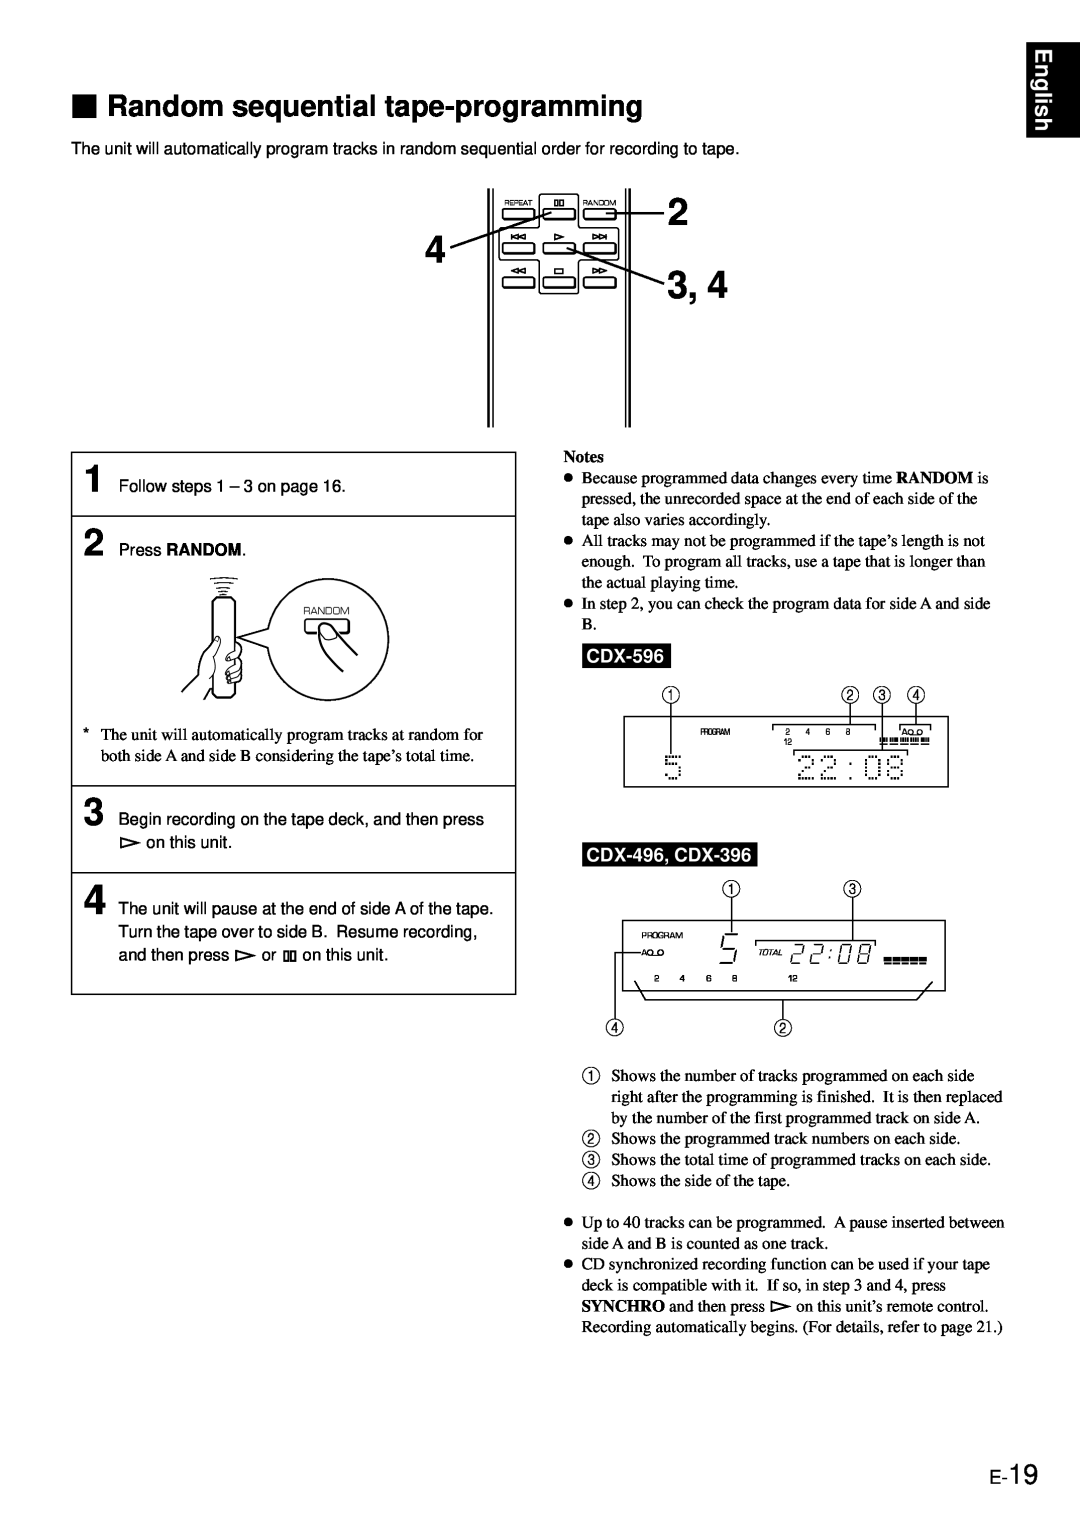 Yamaha owner manual Random sequential tape-programming, English, CDX-596, CDX-496, CDX-396 